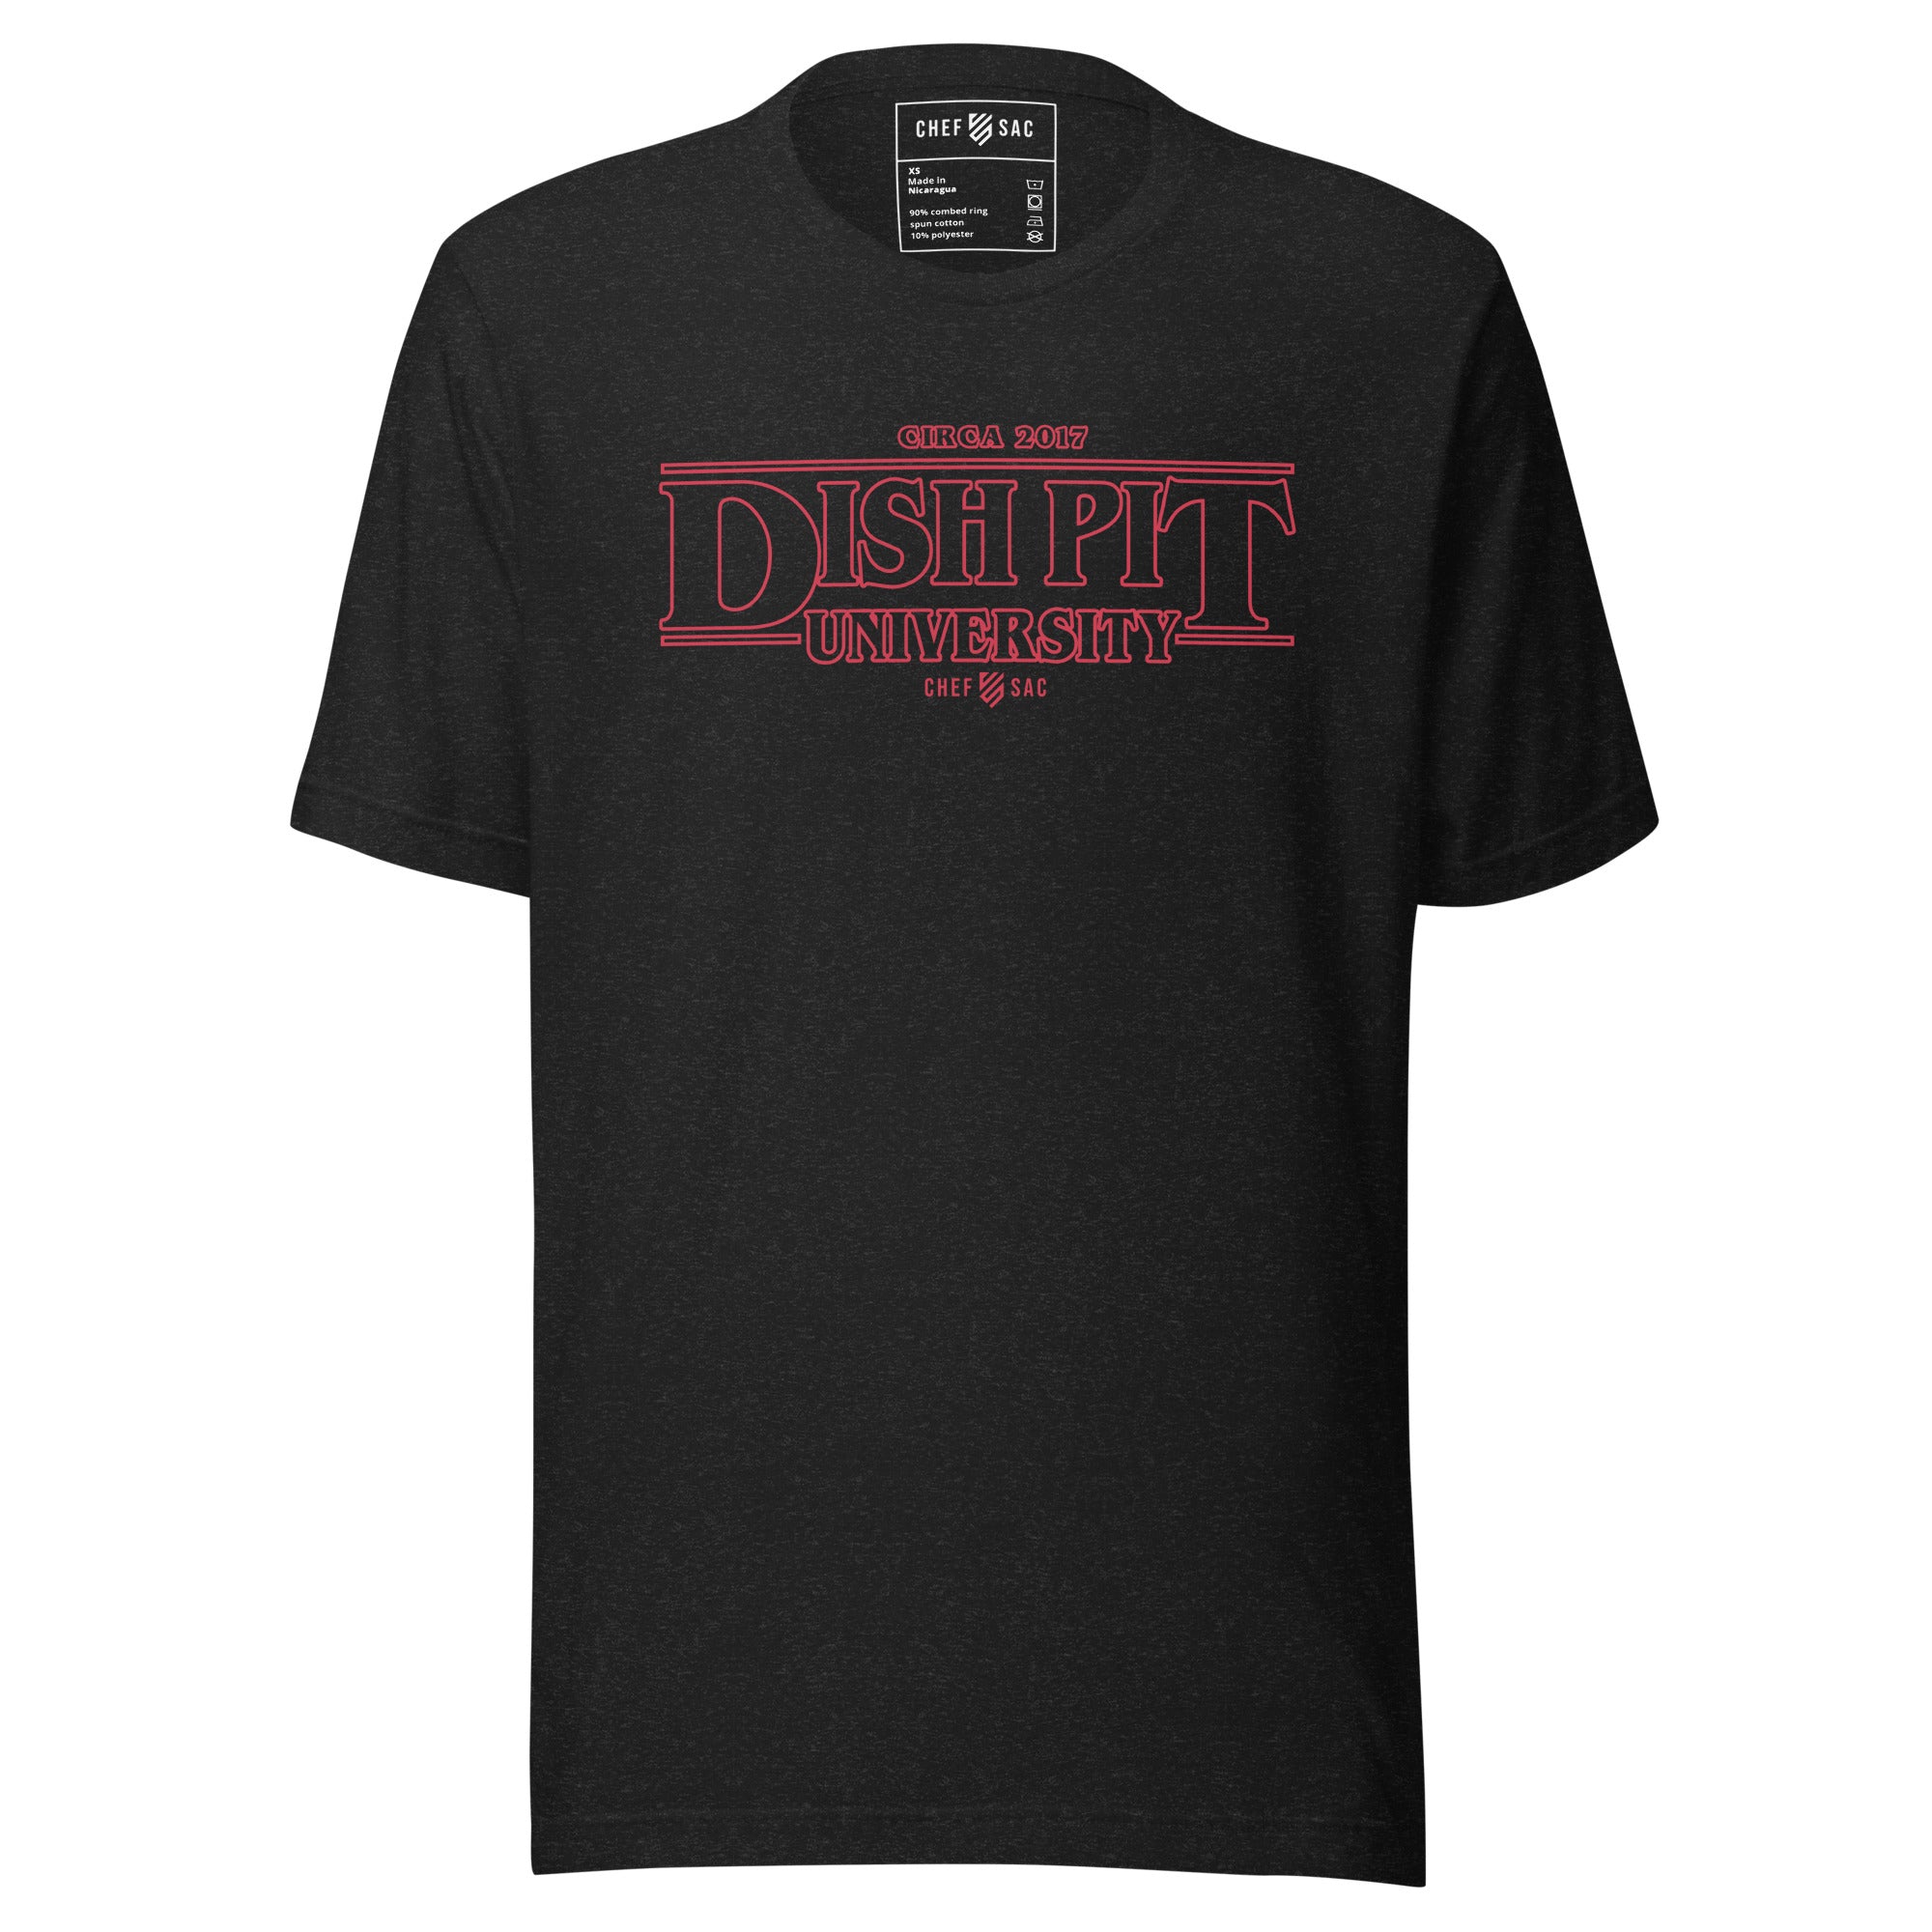 Stranger Dish Pit University T-Shirt